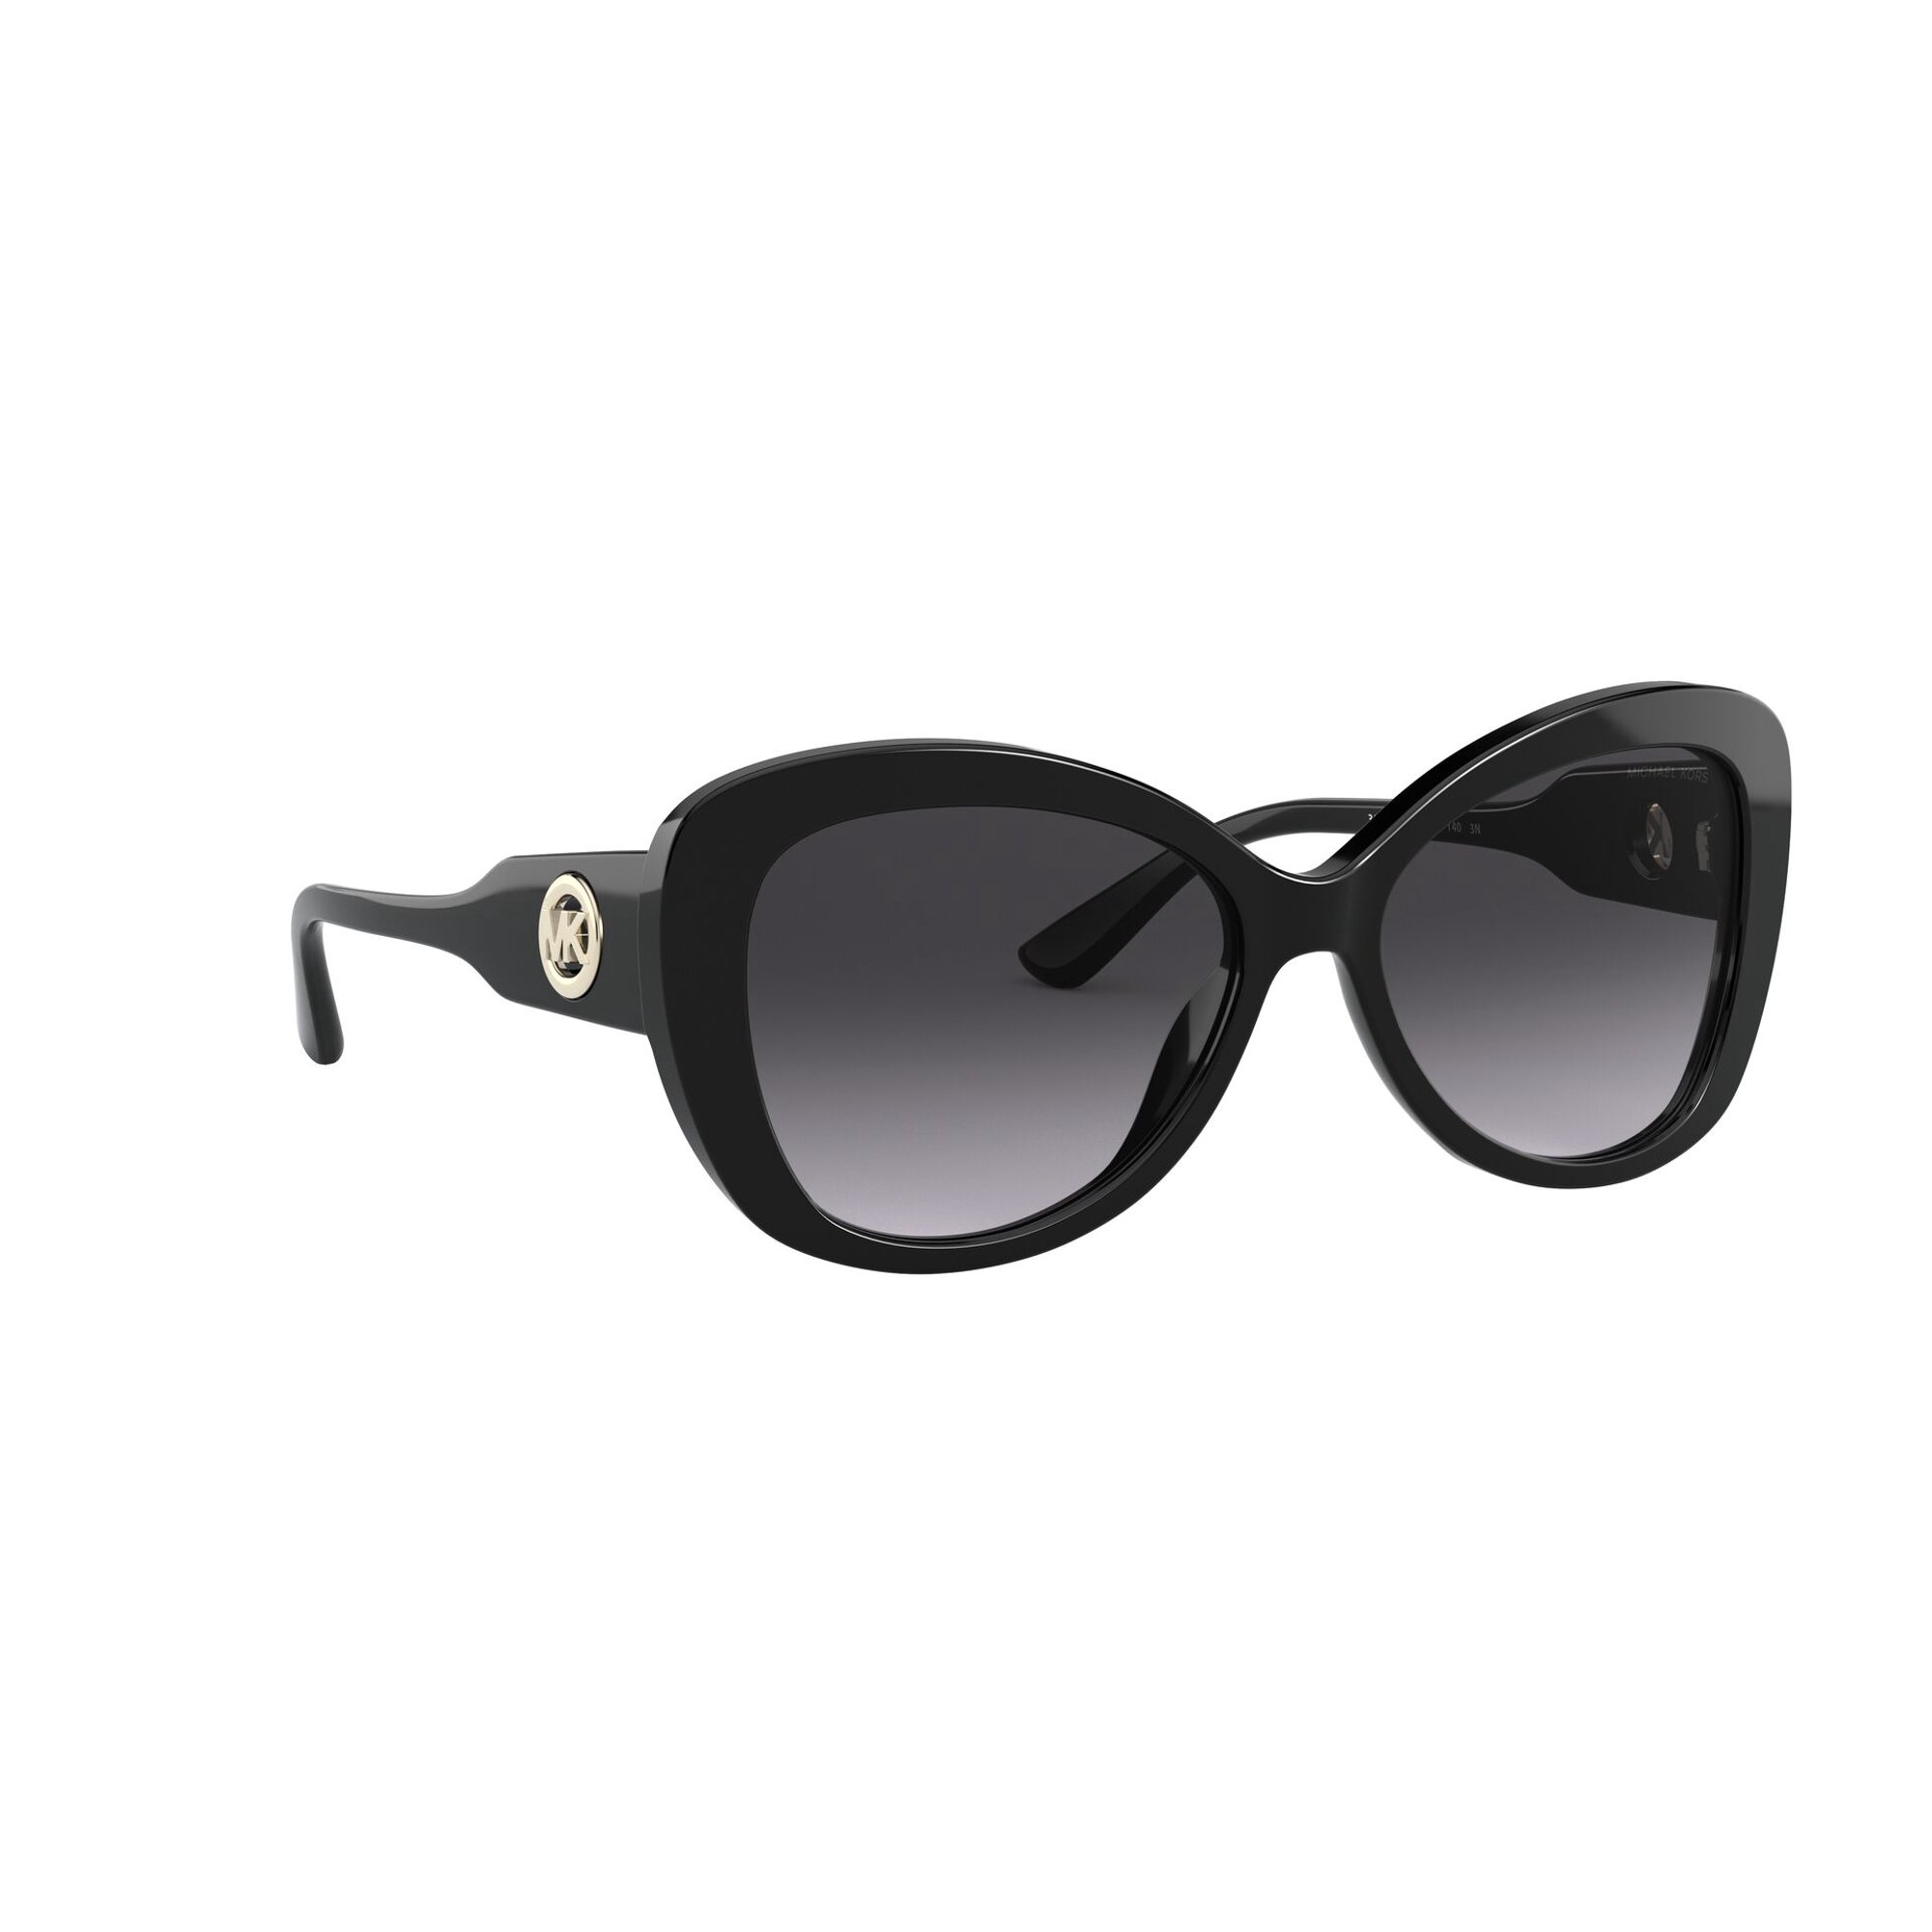 Michael Kors Grey Gradient Butterfly Ladies Sunglasses 0MK2120 30058G 56